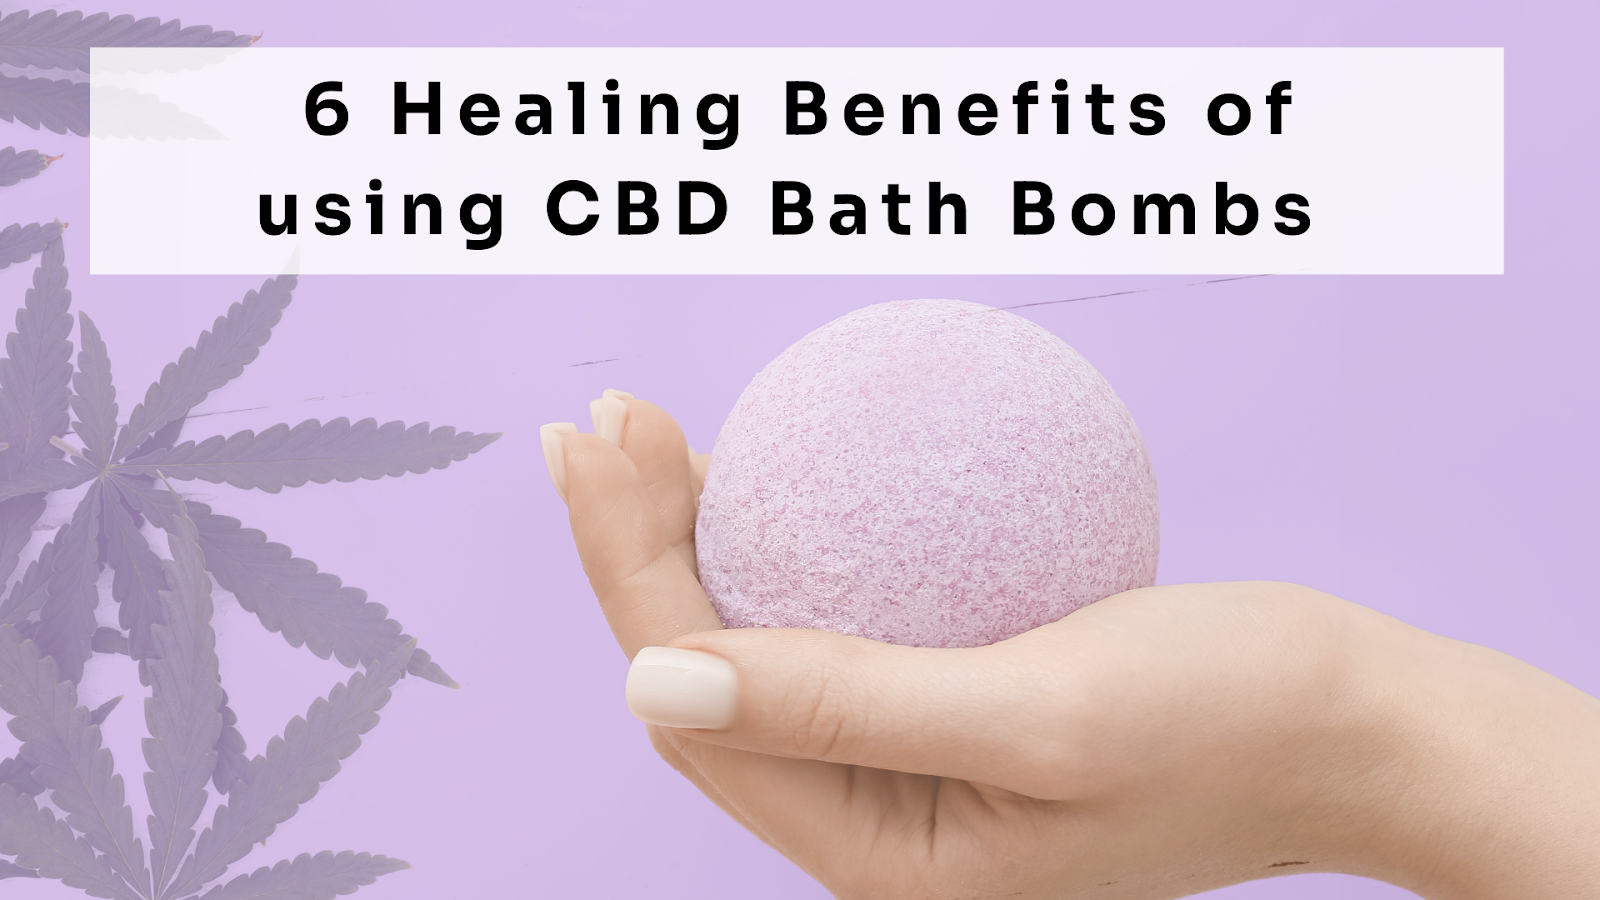 6 Benefits of CBD bath bombs